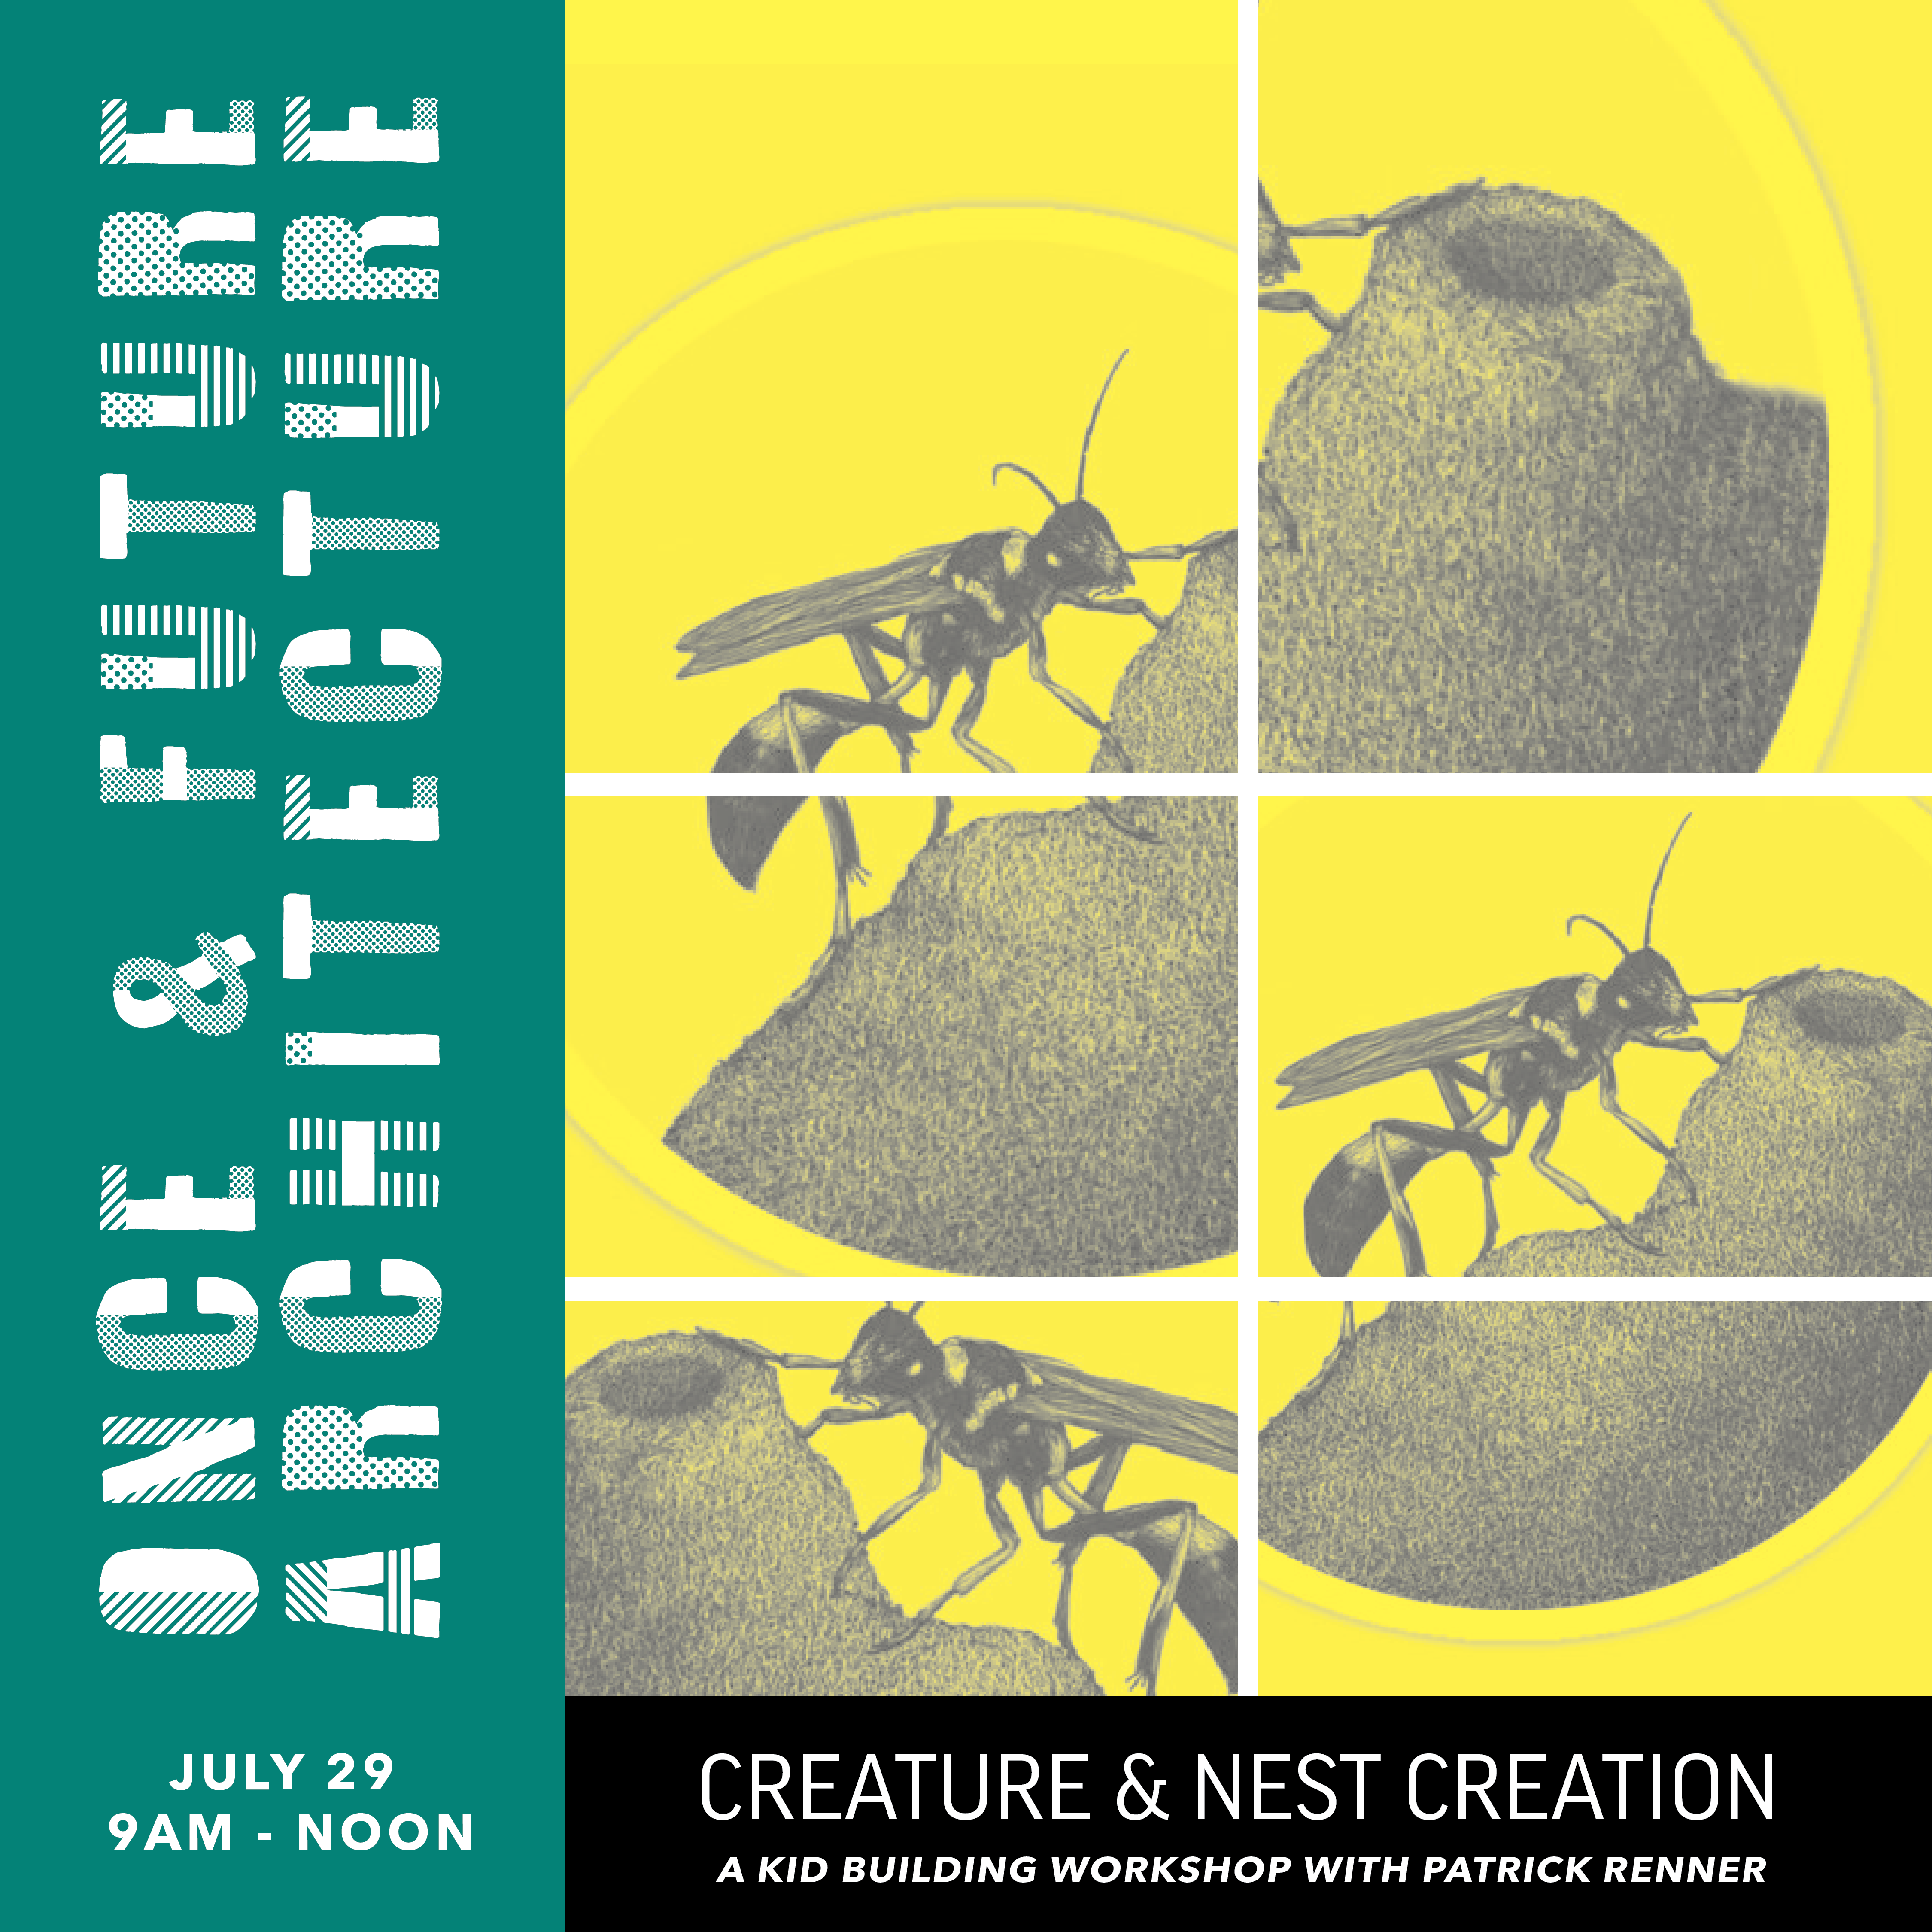 Creature & Nest Creation